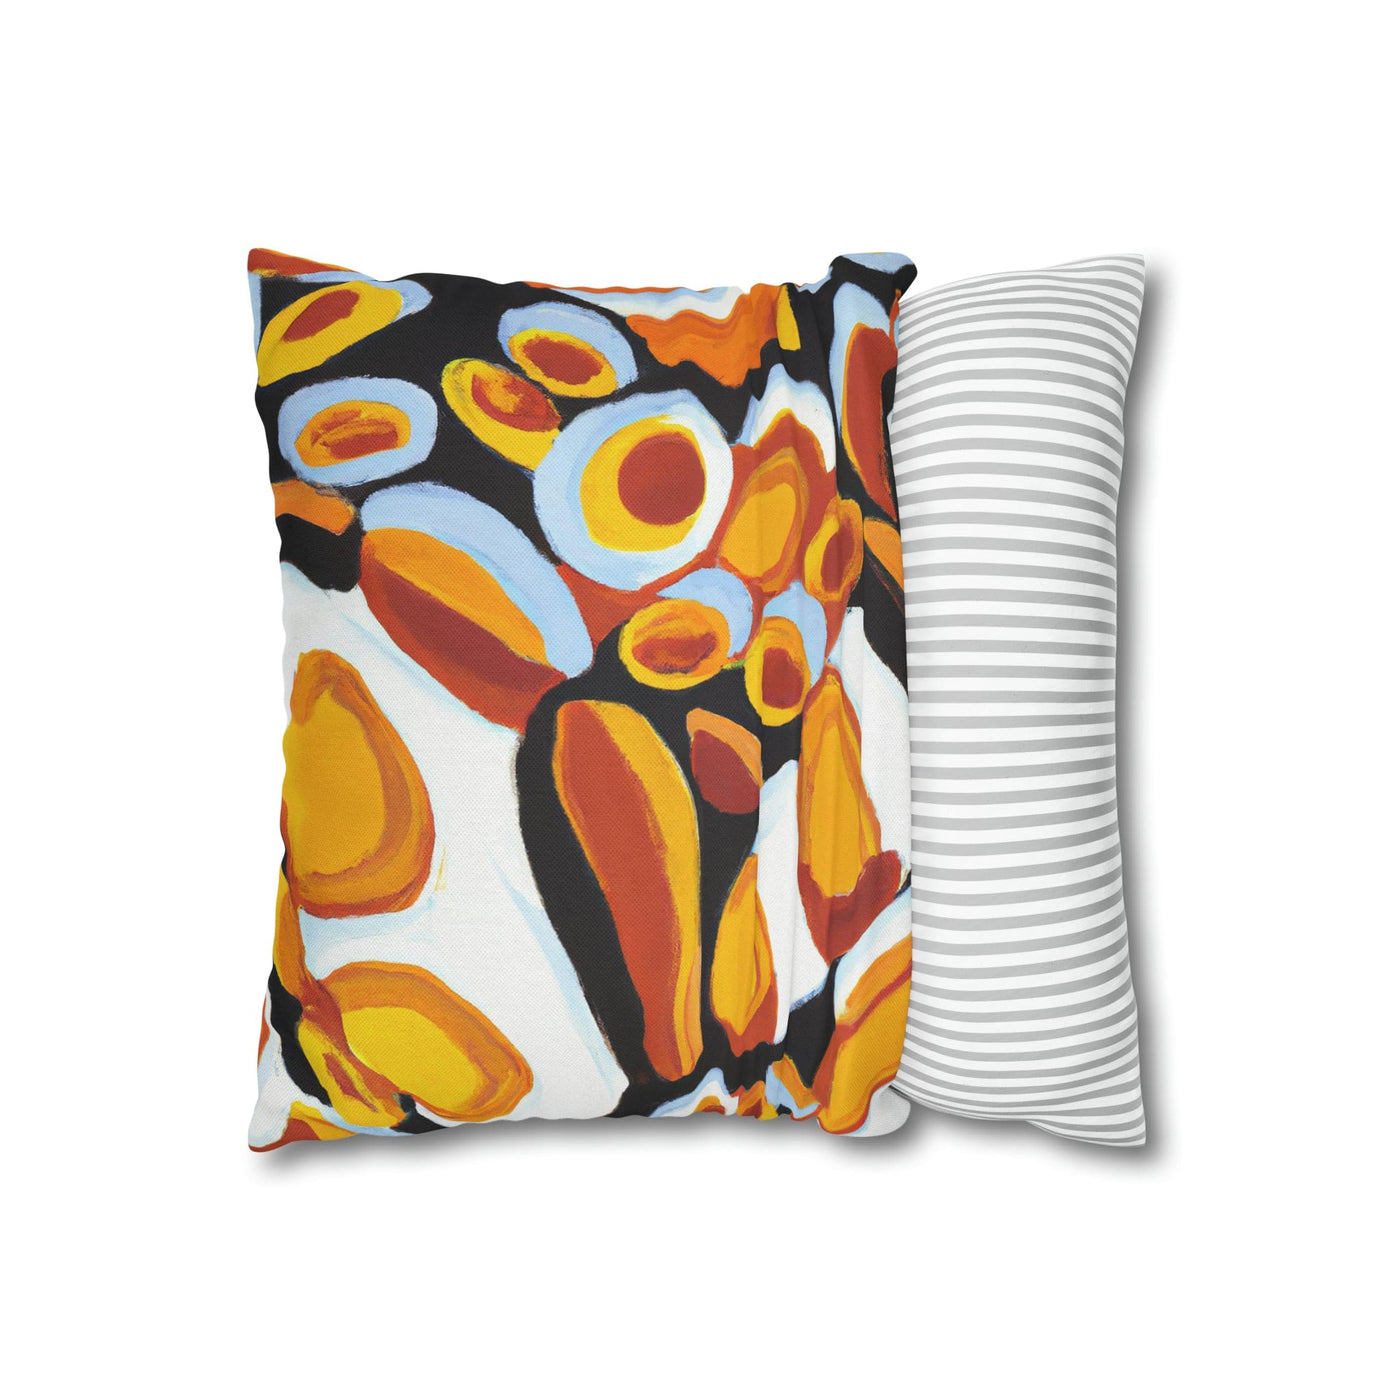 Decorative Throw Pillow Covers With Zipper - Set Of 2 Orange Black White